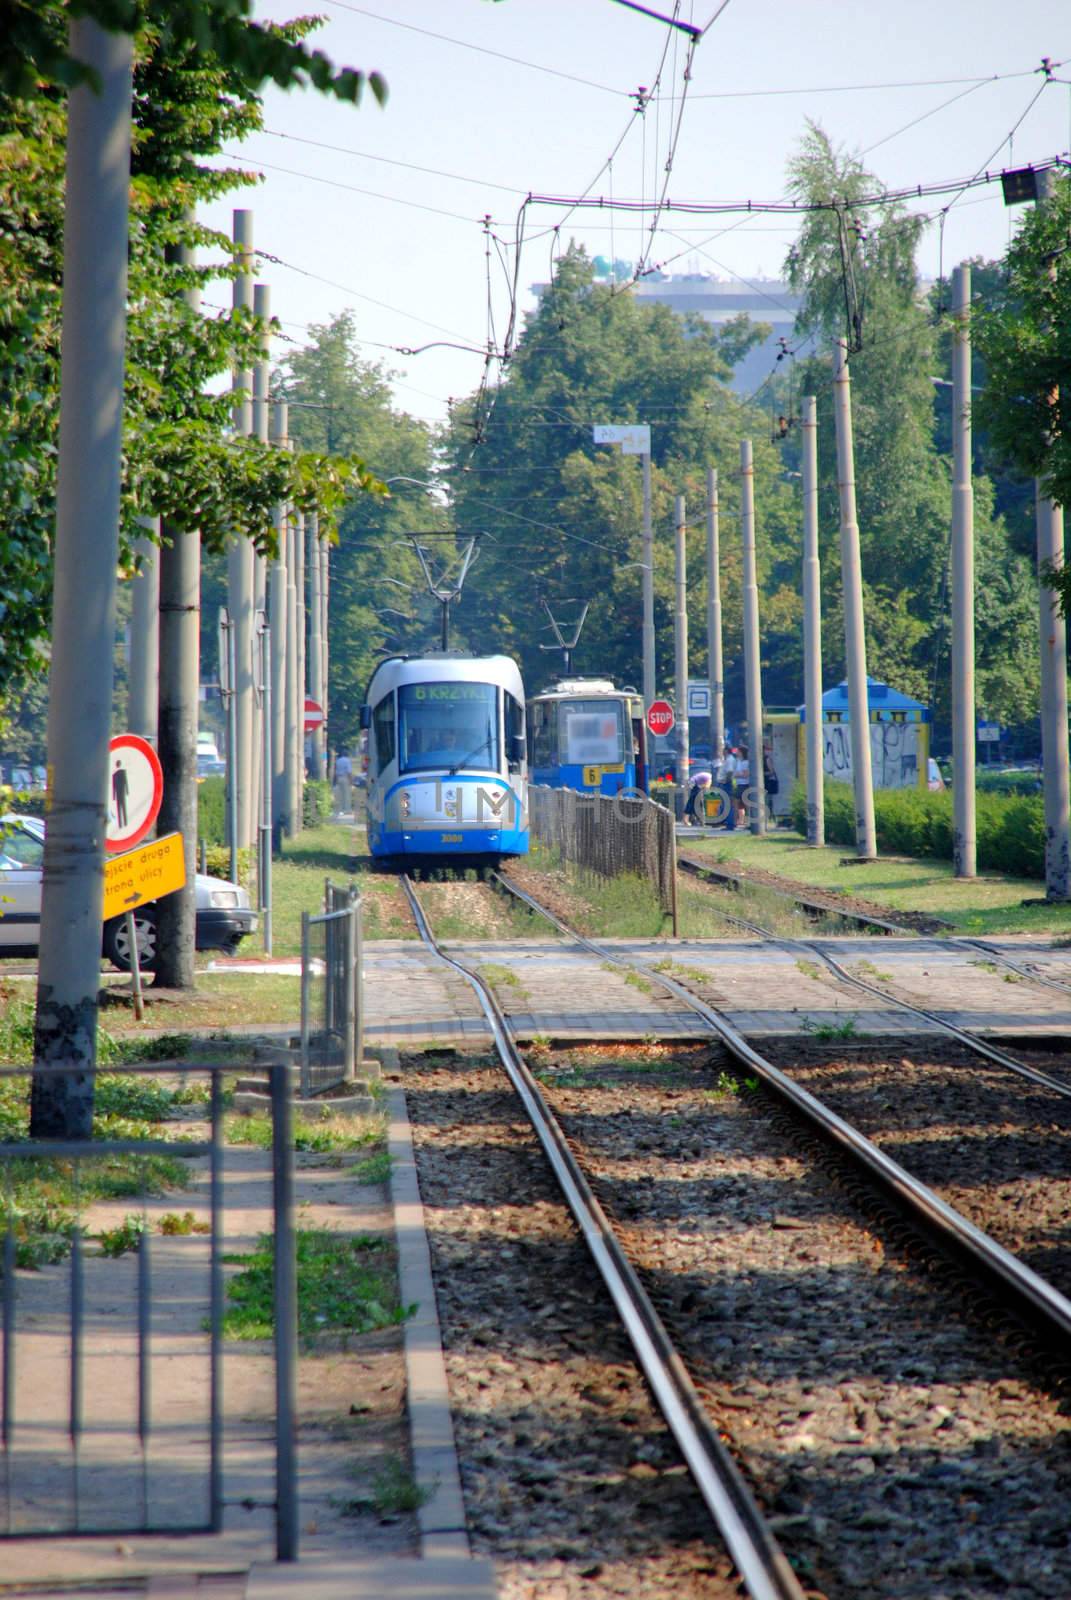 MPK. Public transport in Wroclaw